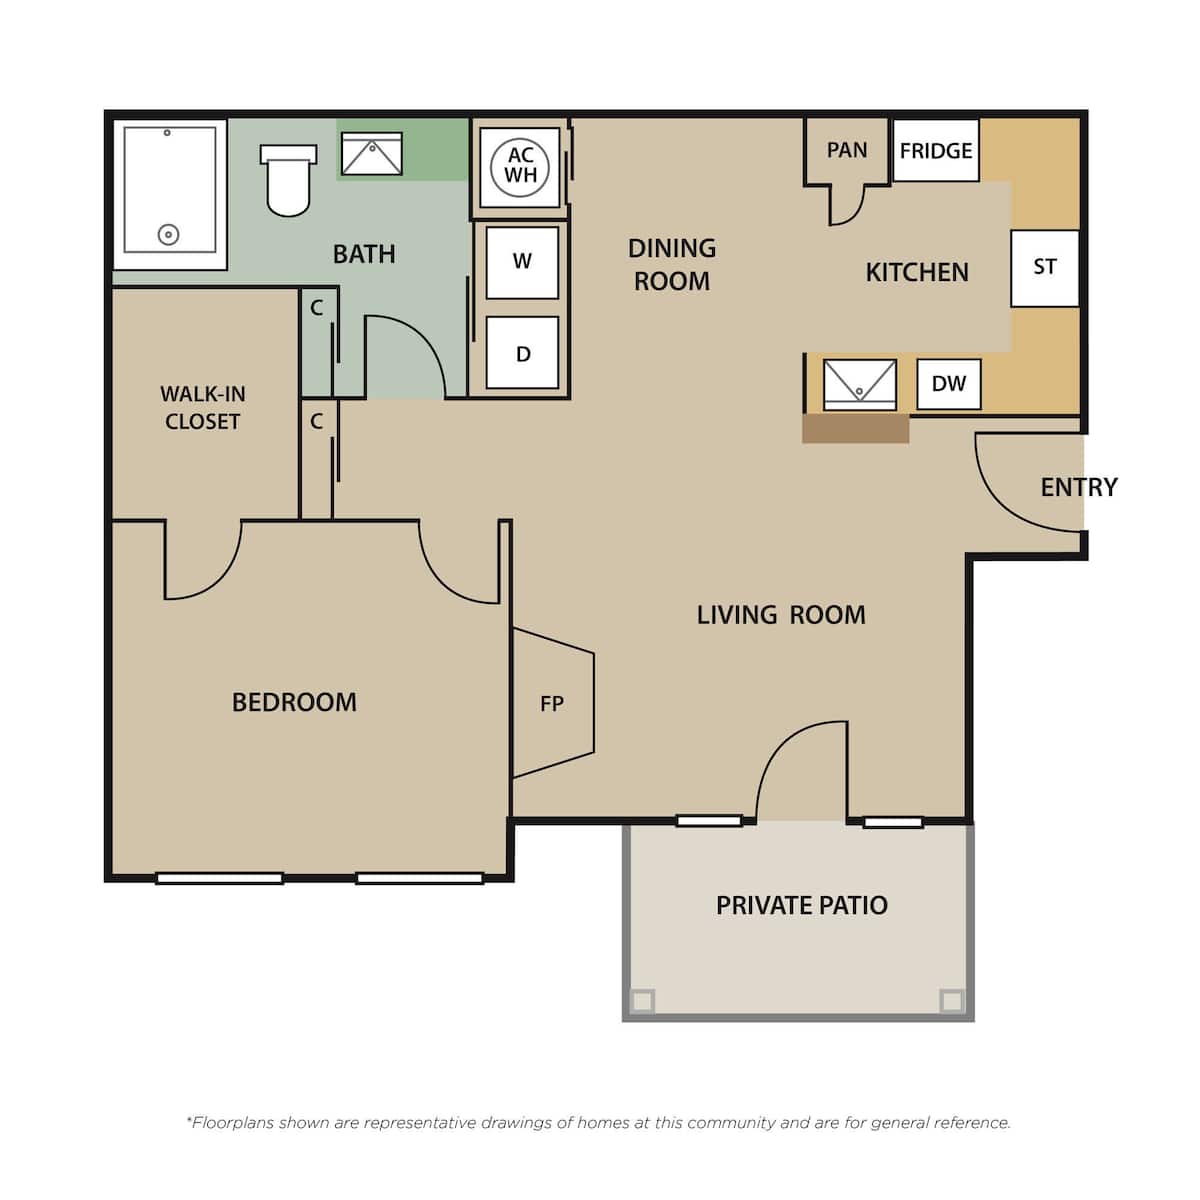 Floorplan diagram for GROVE A5, showing 1 bedroom